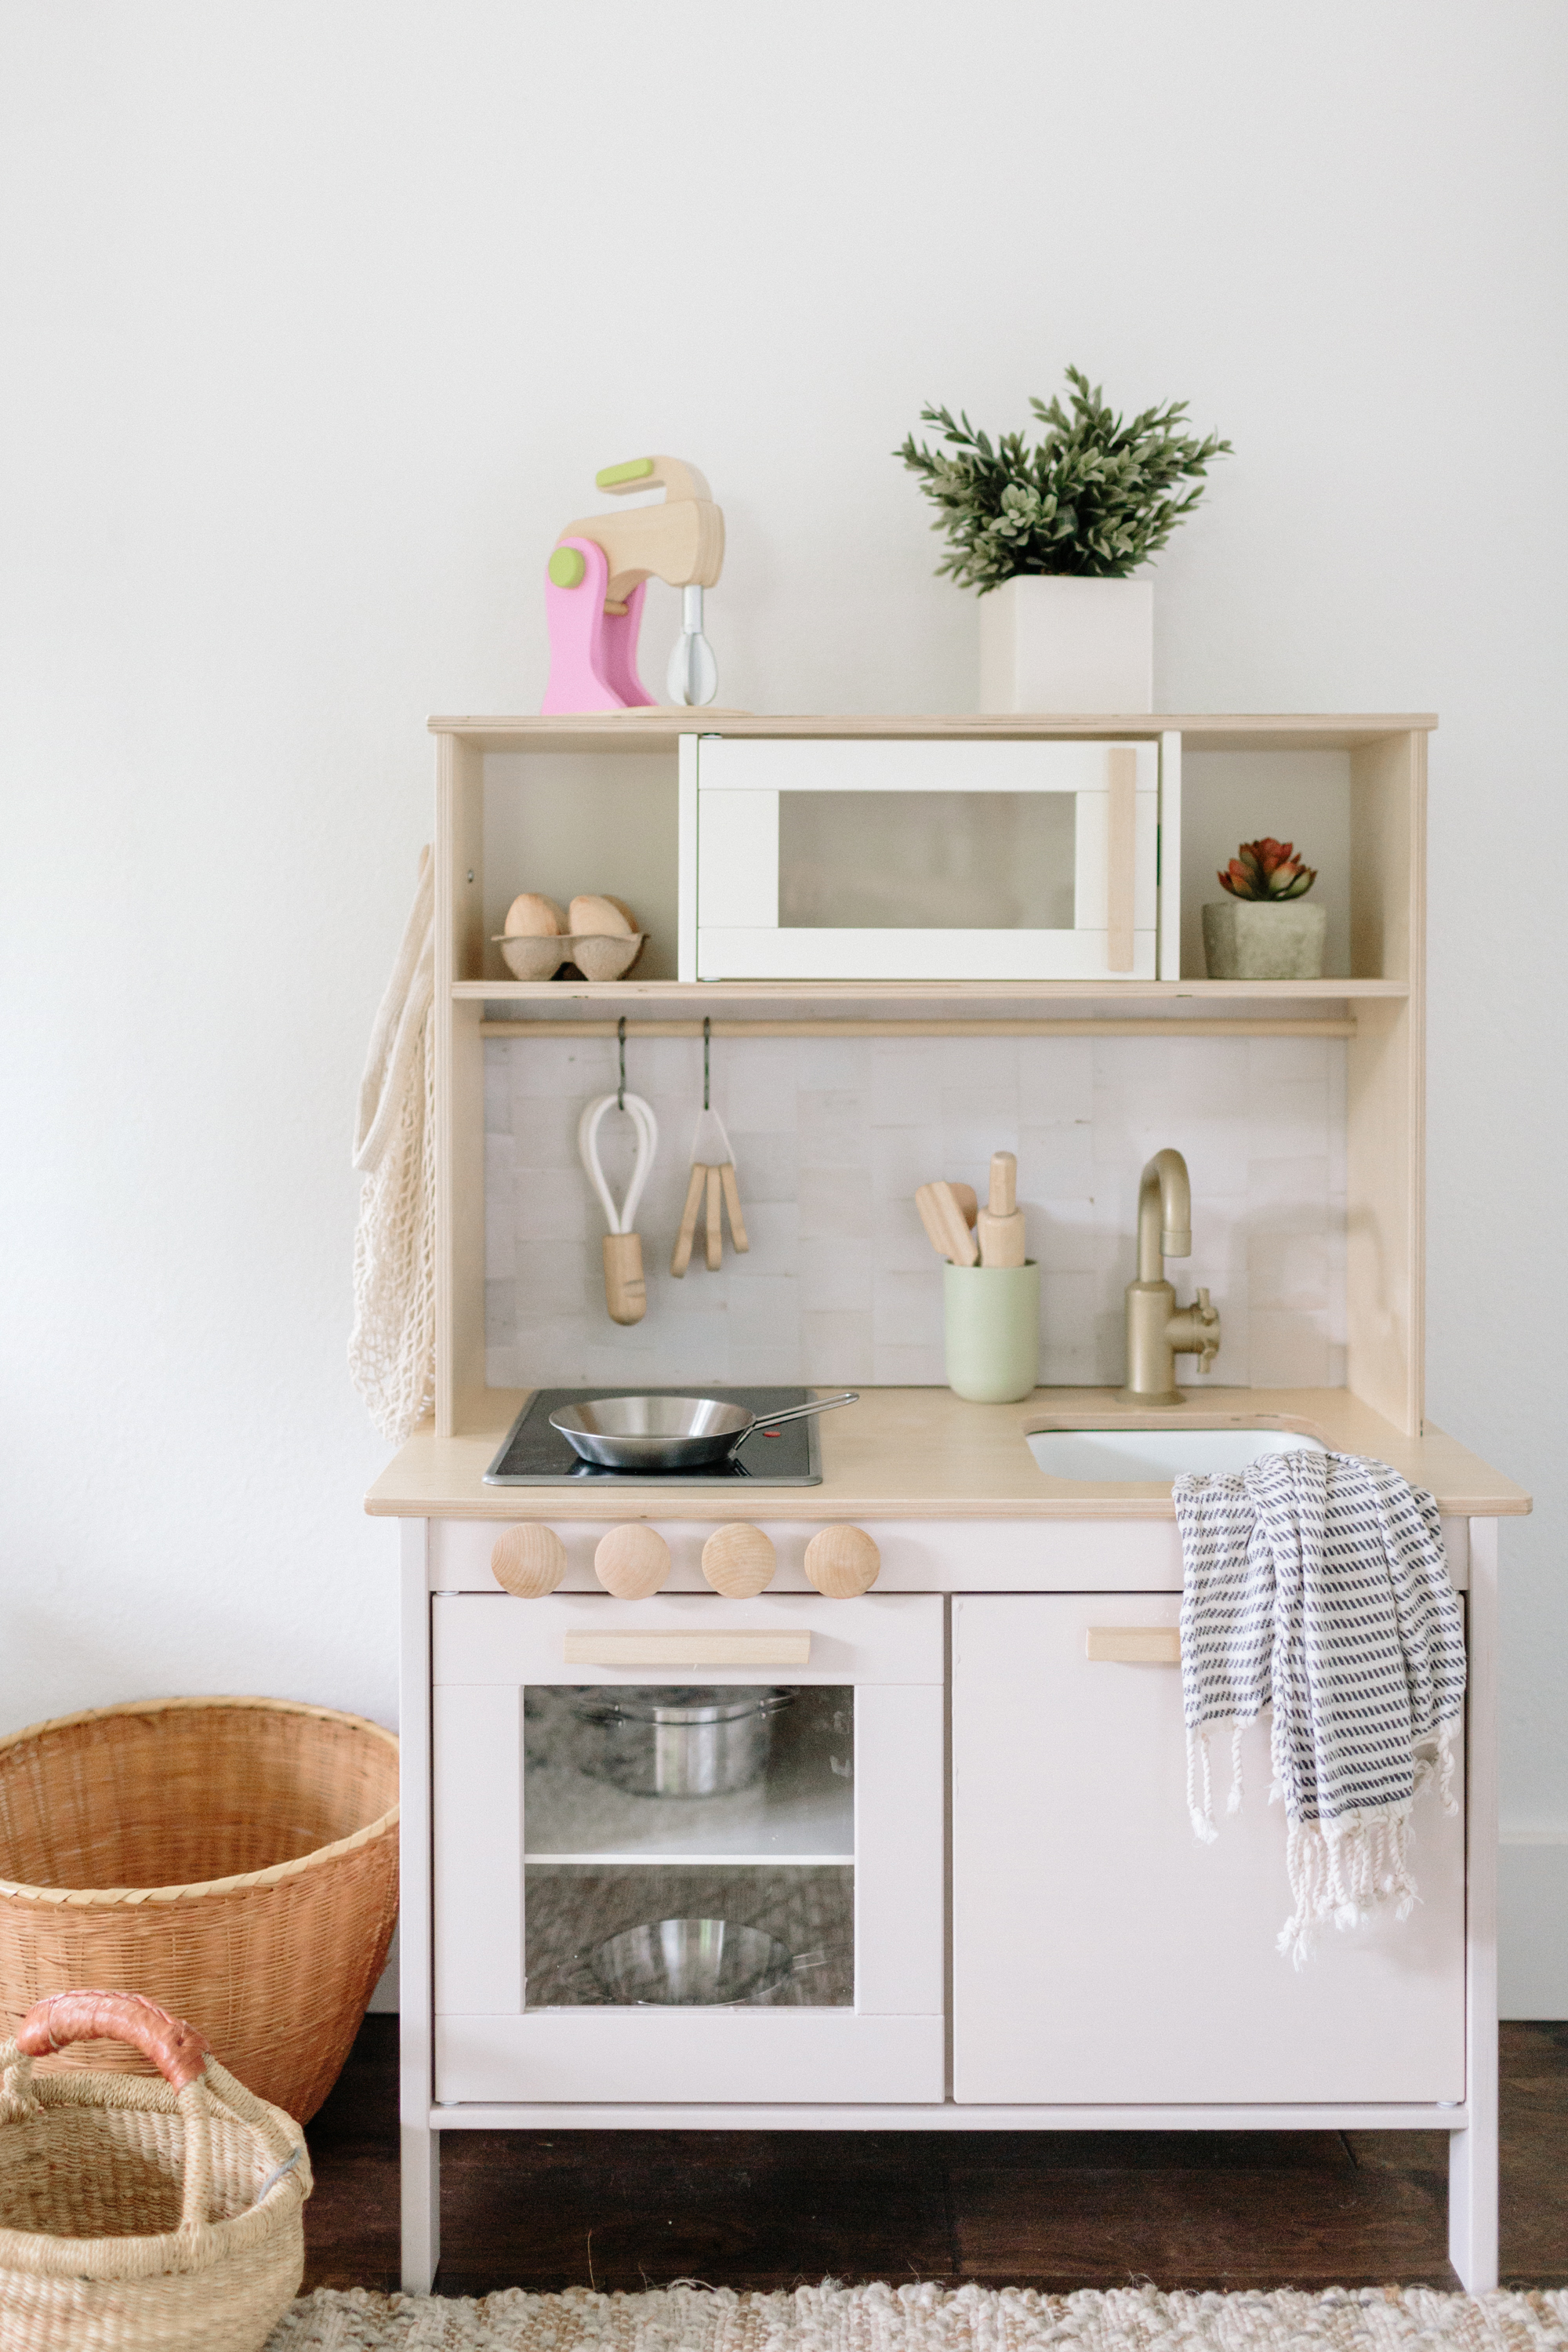 DIY: A Montessori Toddler Kitchen Makeover, IKEA HACK